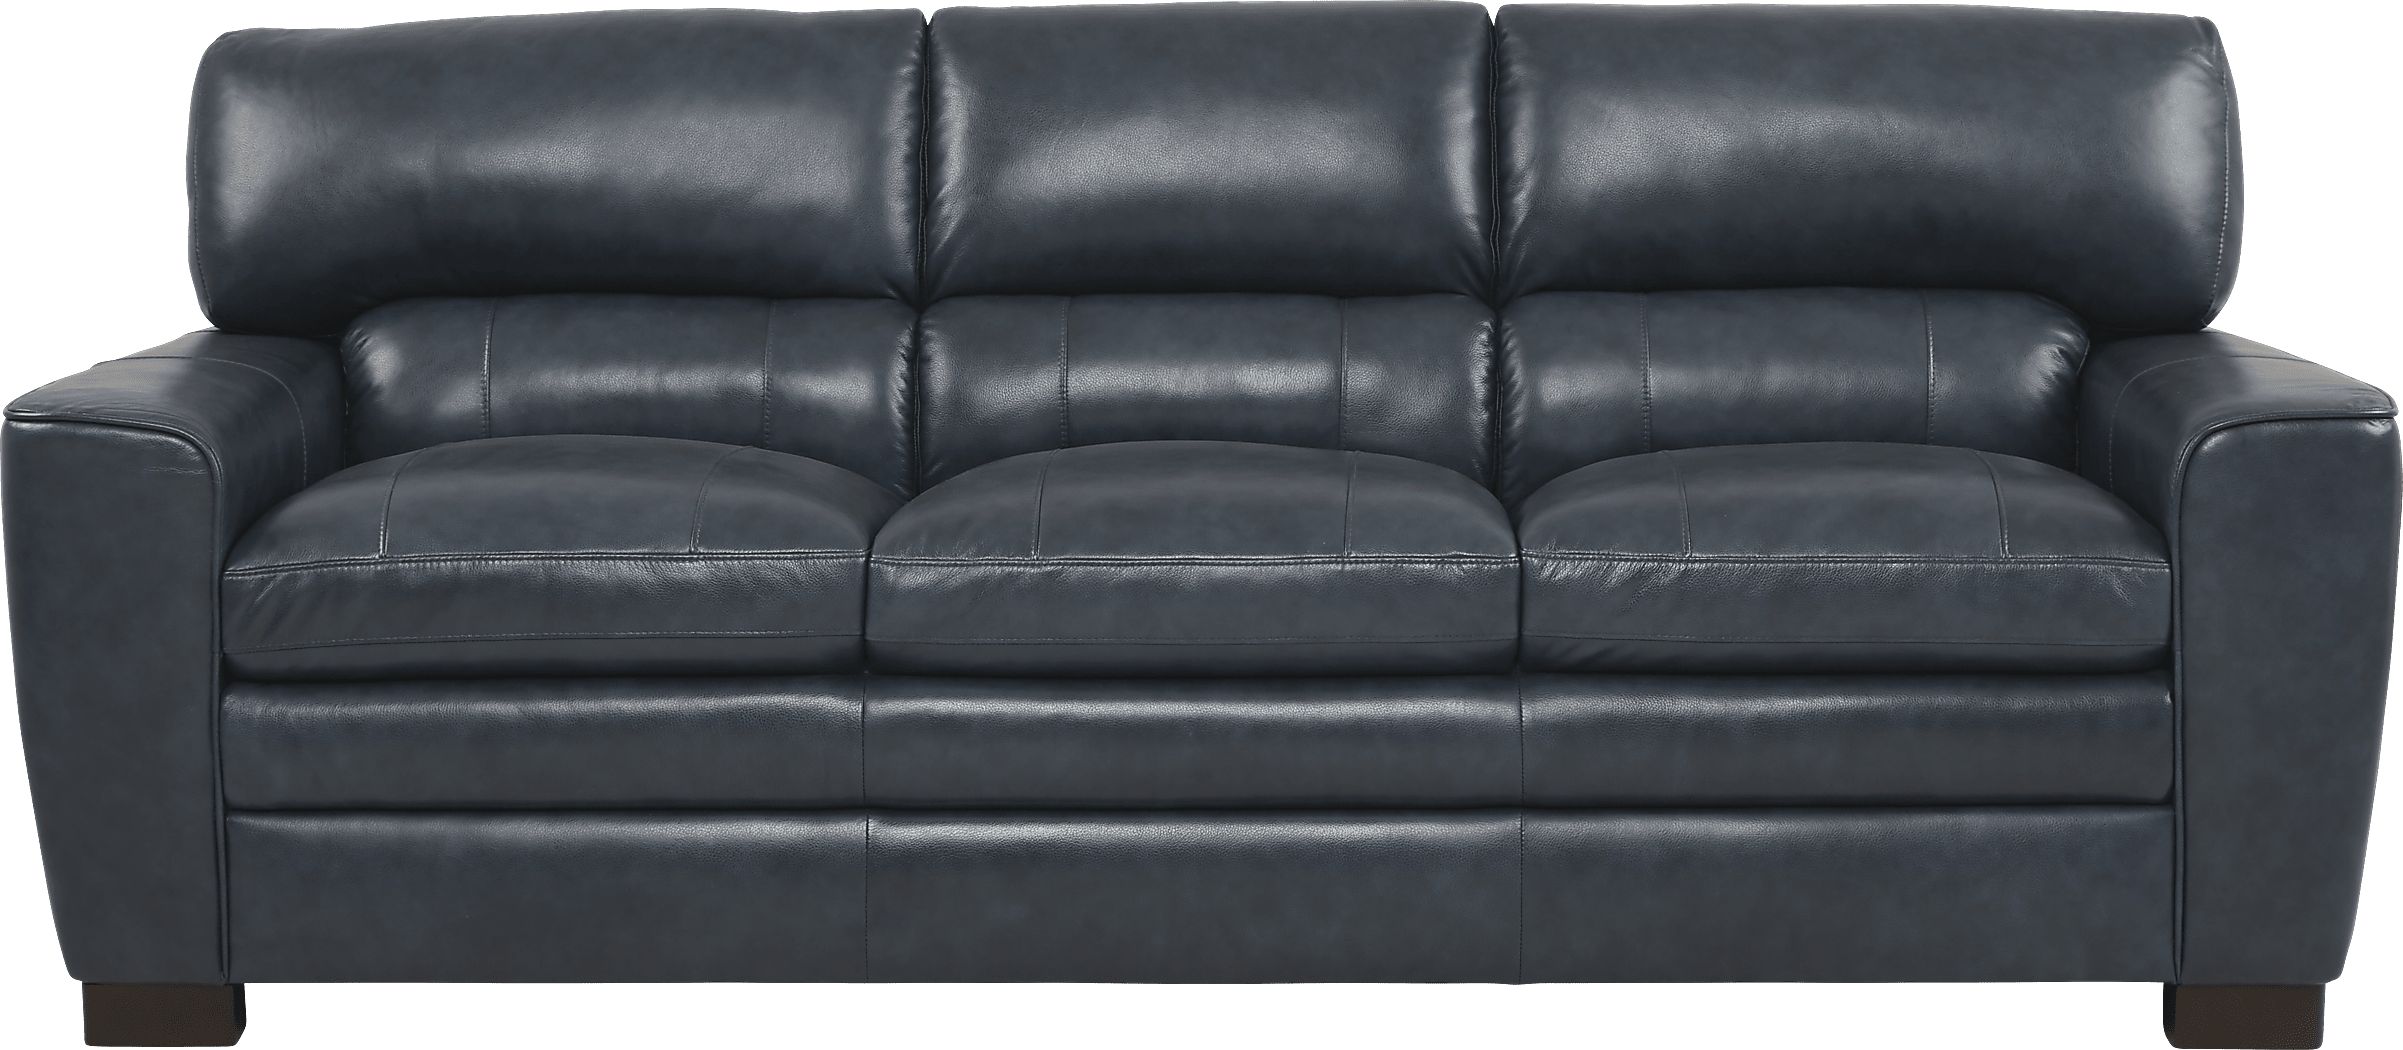 villa cabrini blue leather sofa